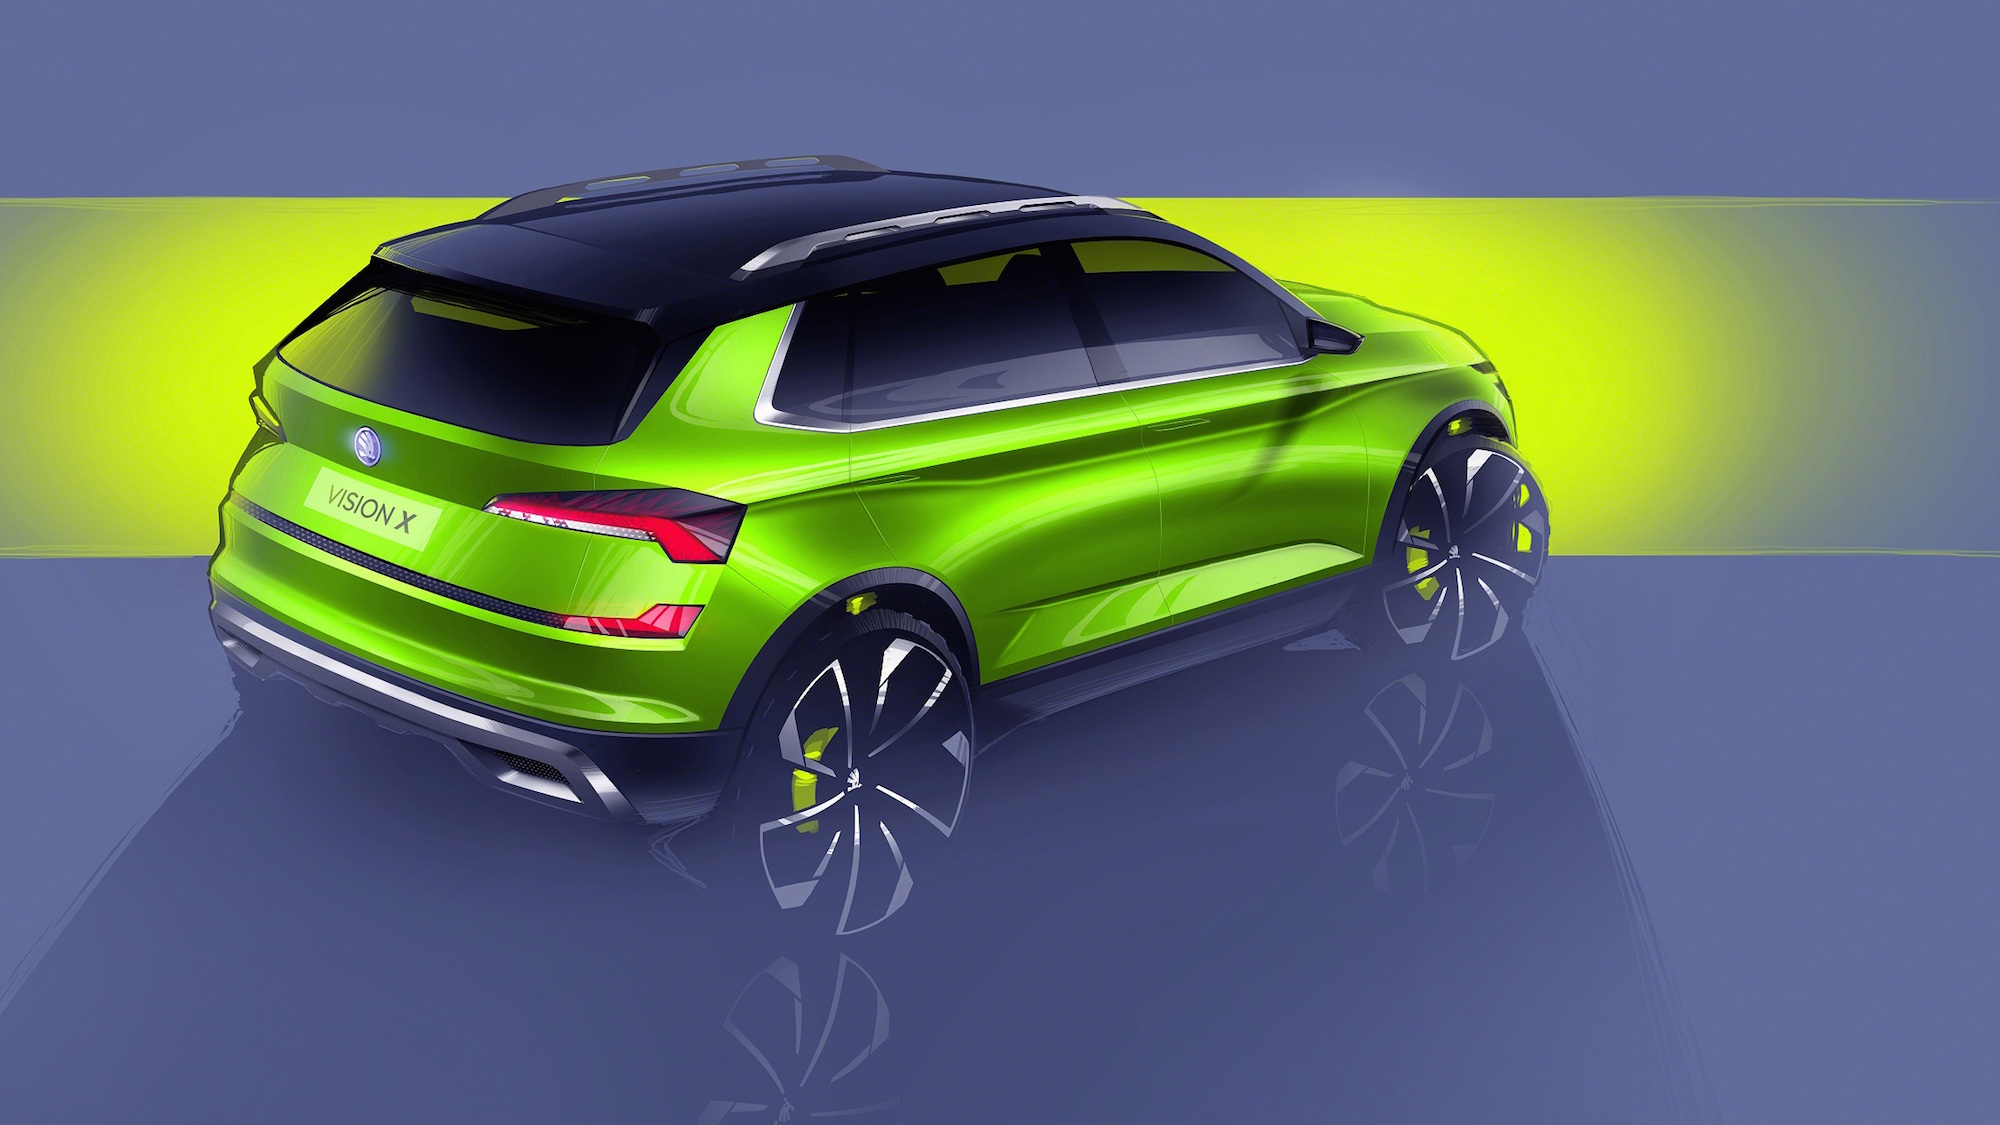 Skoda Vision X concept previews new B-segment SUV